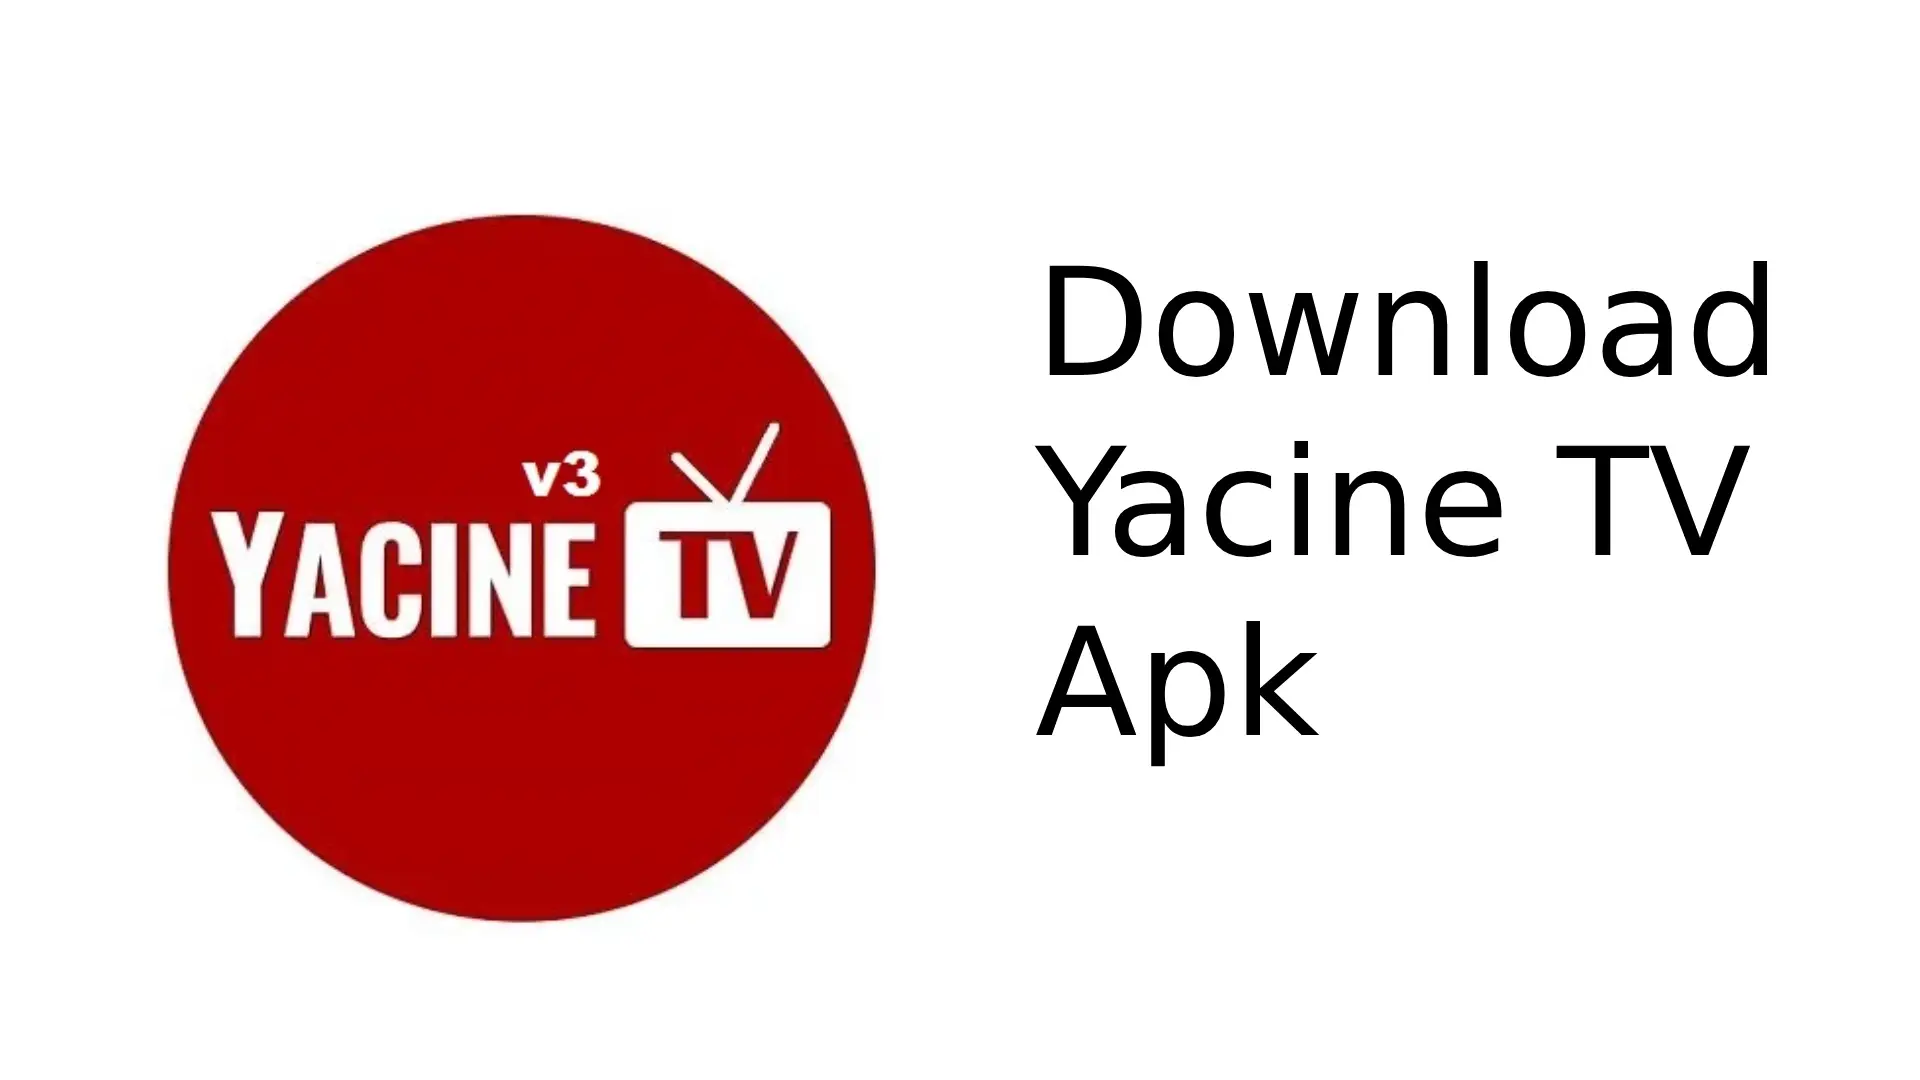 Download Yacine TV Apk